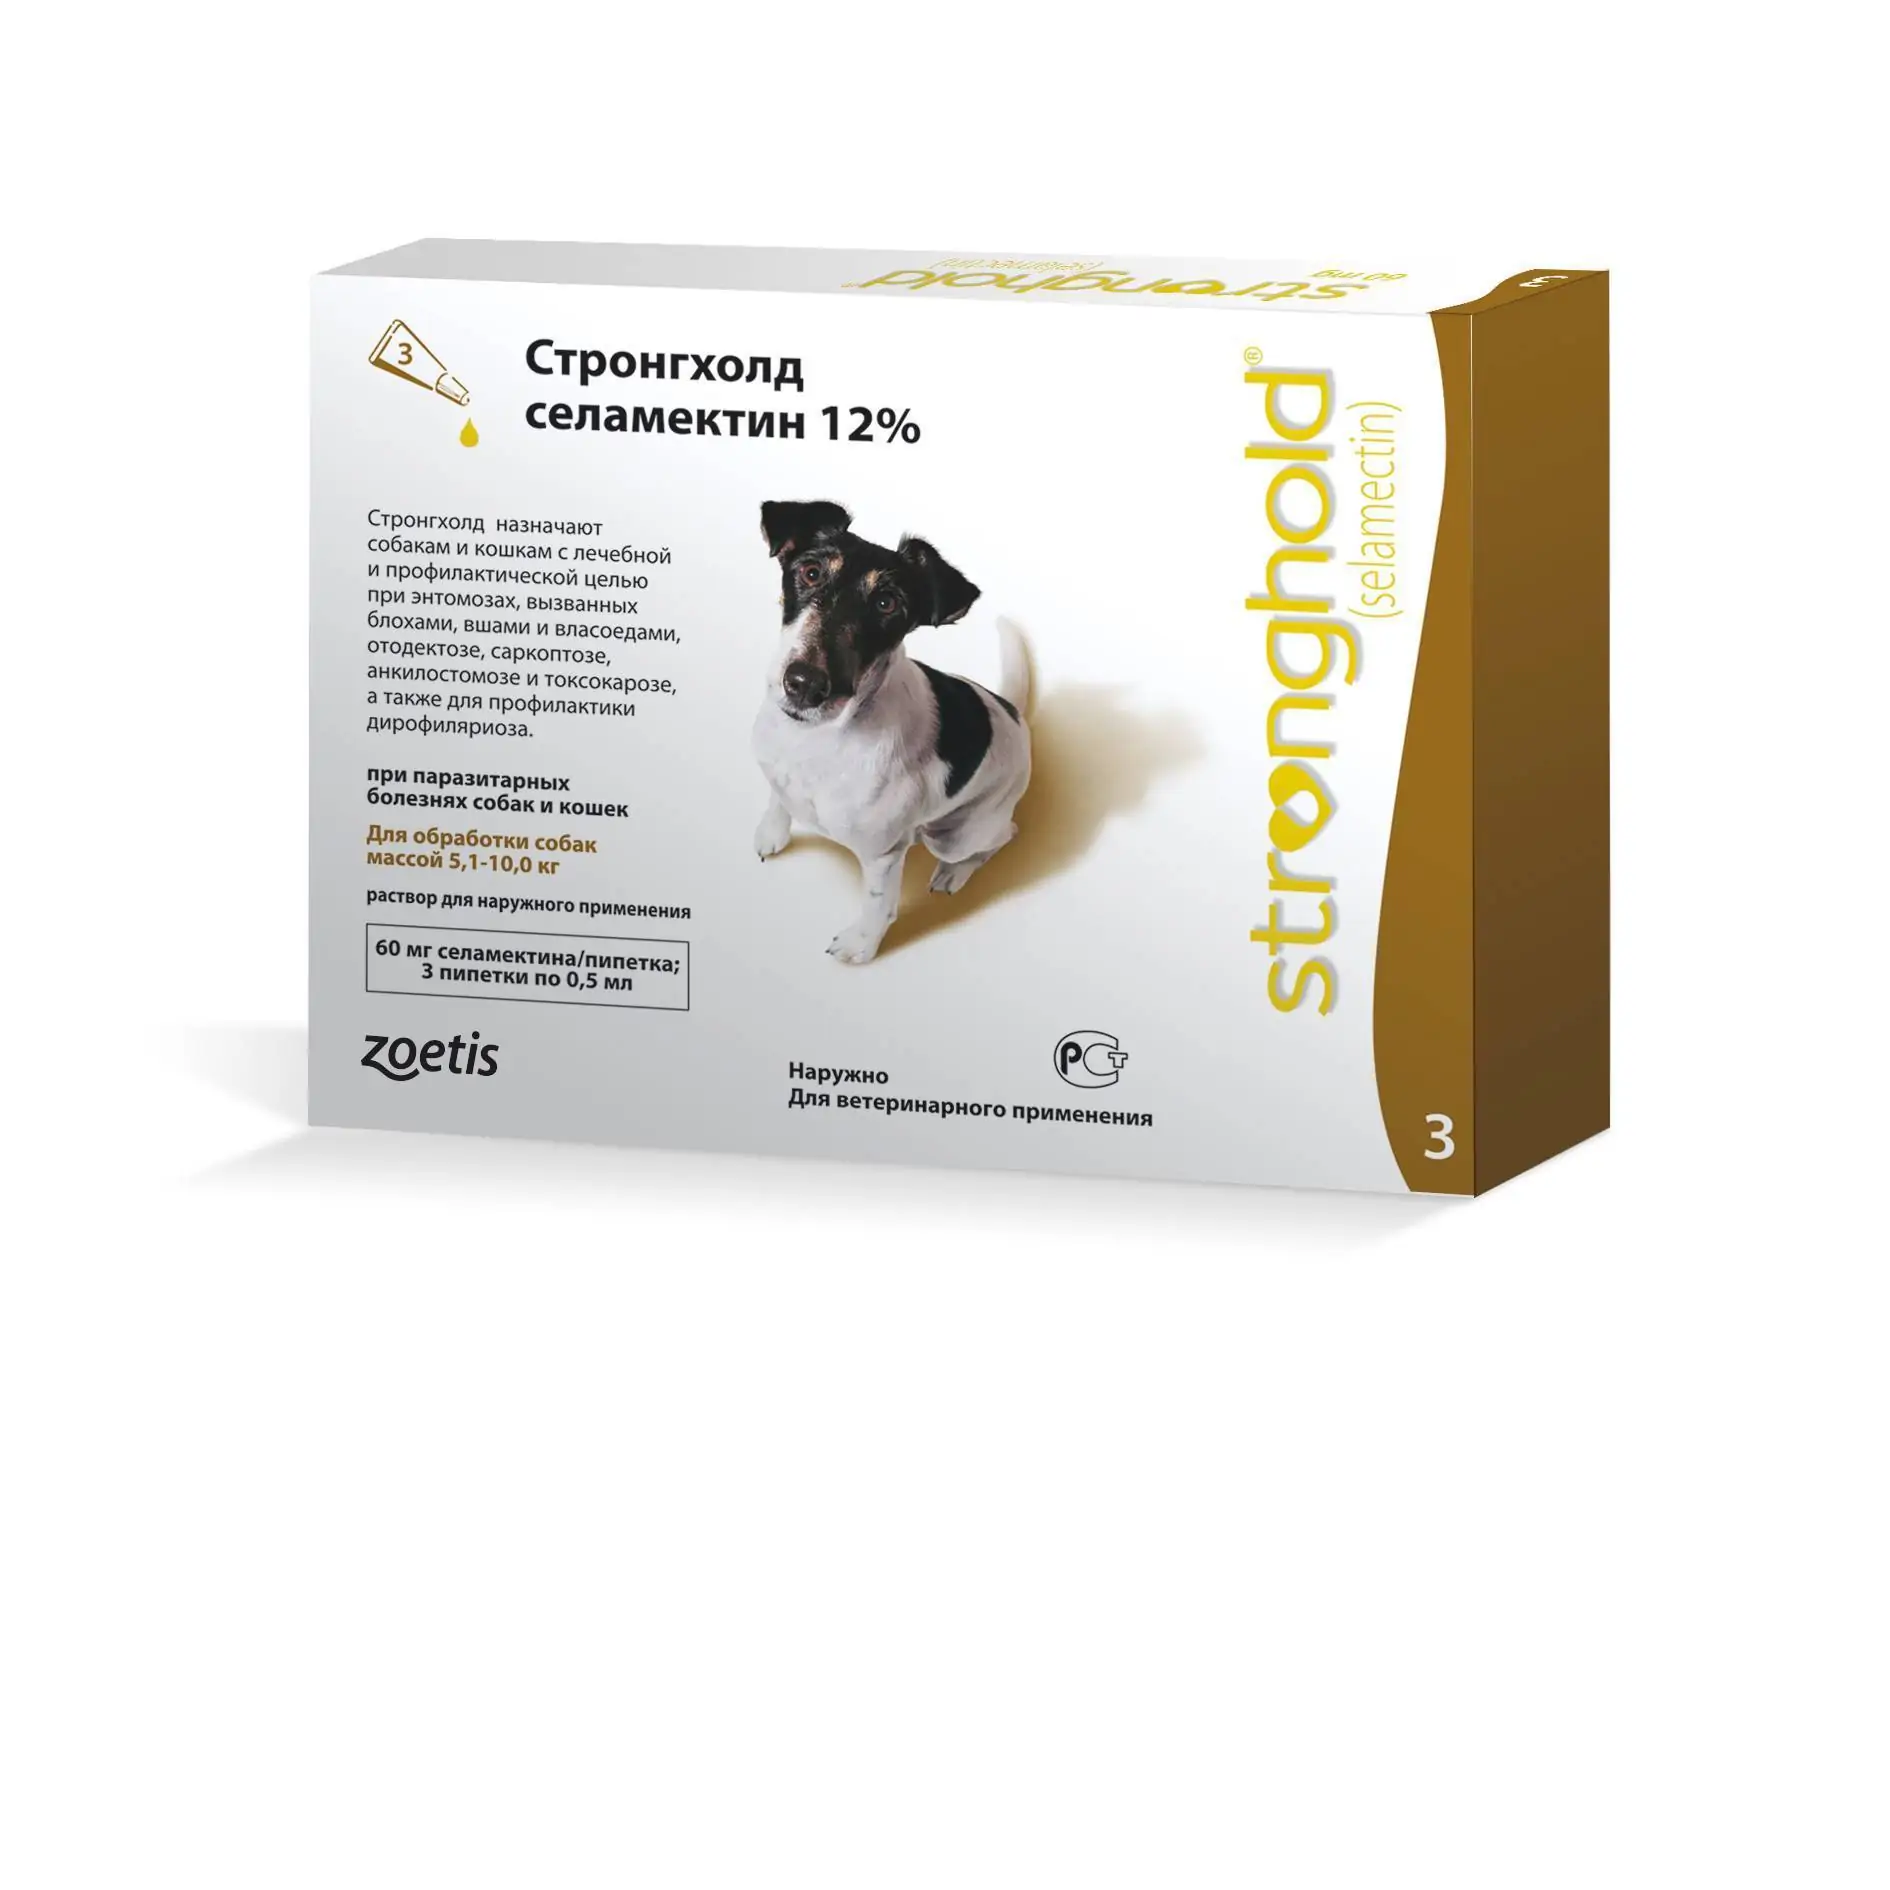 Стронгхолд 60 мг для собак массой от 5,1 до 10 кг,  цена за 1 пипетку петдог